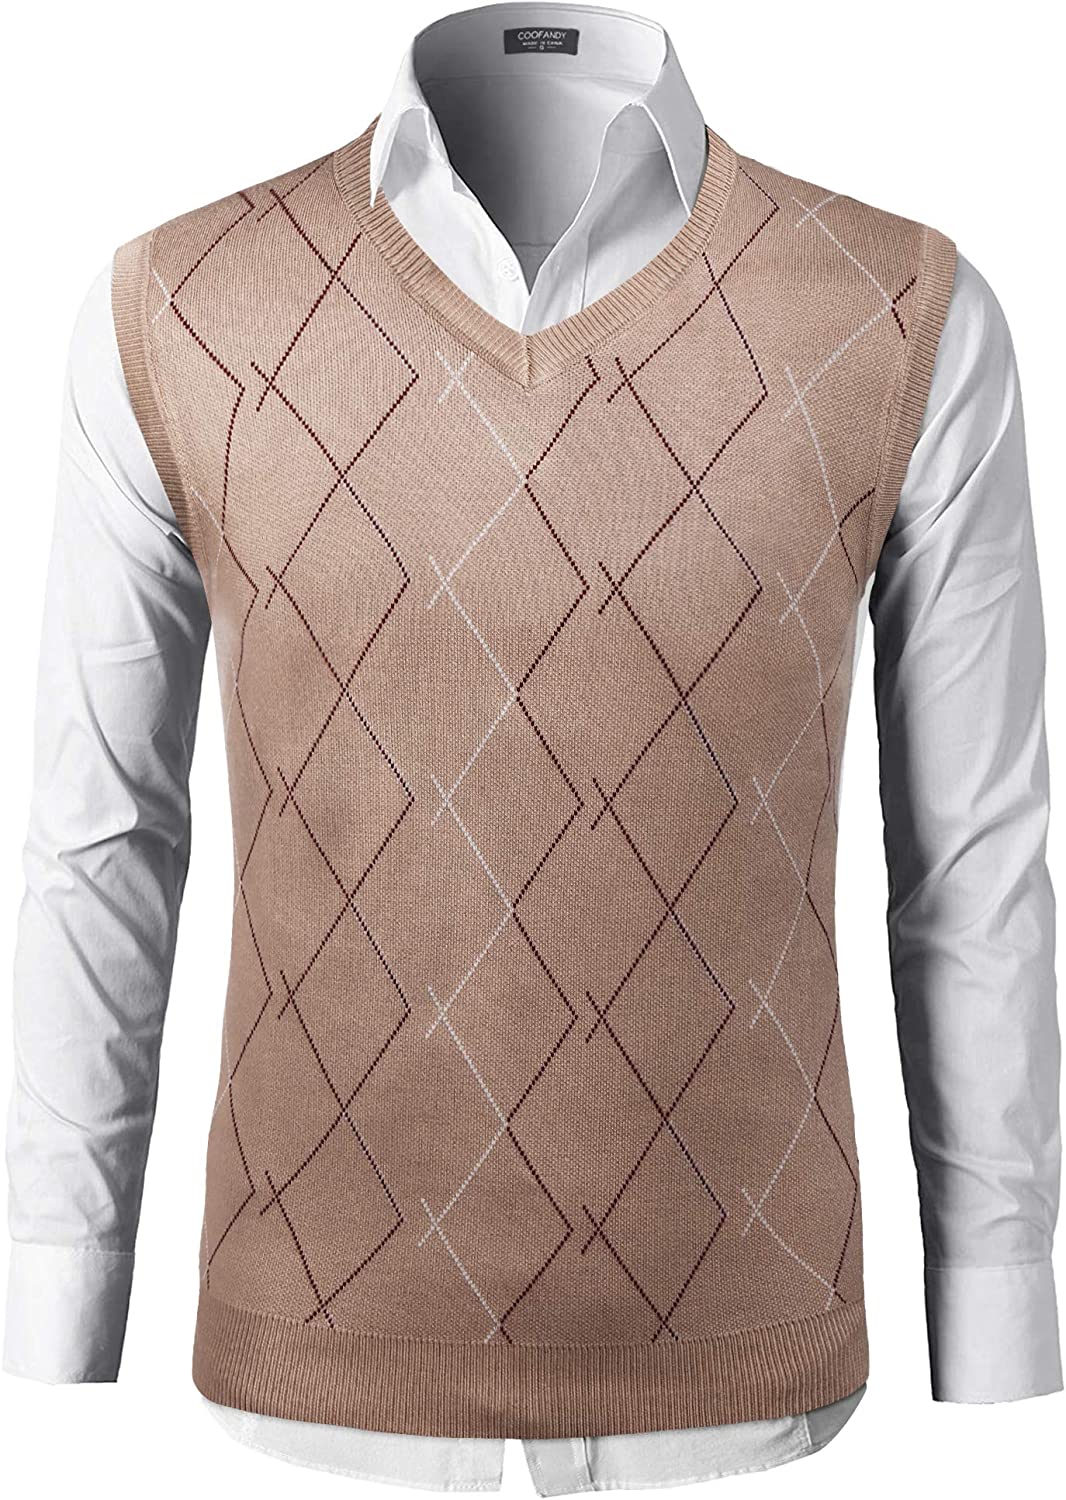 COOFANDY Mens Plain Sweater Vest Casual Slim fit Sleeveless Knit Vest Pullover Black 